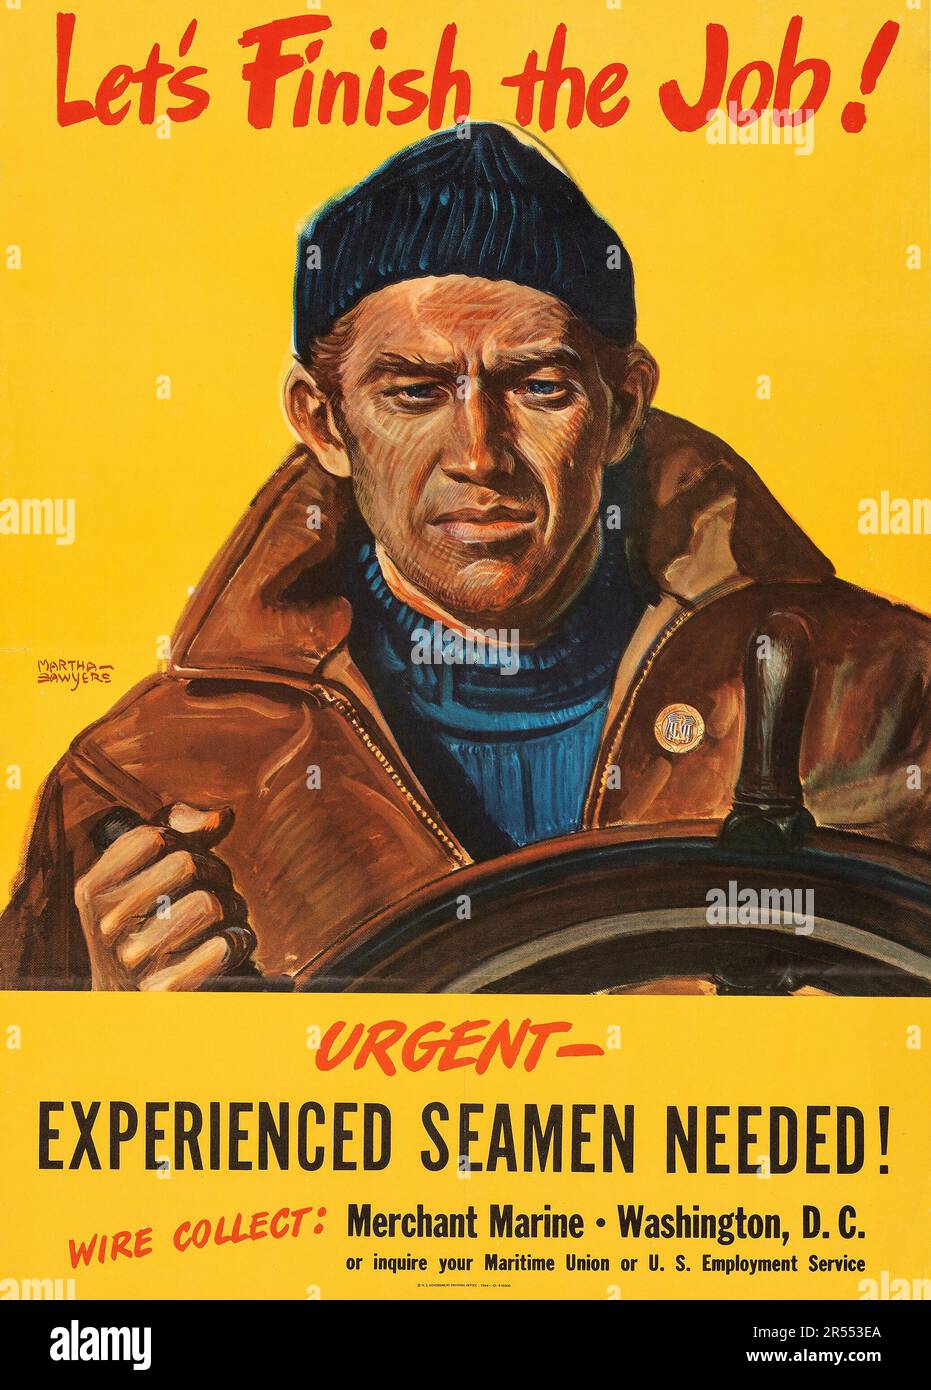 American World War II Propaganda (U.S. Government Printing Office, 1944) Recruitment Poster - 'Let's Finish the Job, Experienced Seamen Needed' Martha Sawyers Artwork Stock Photo